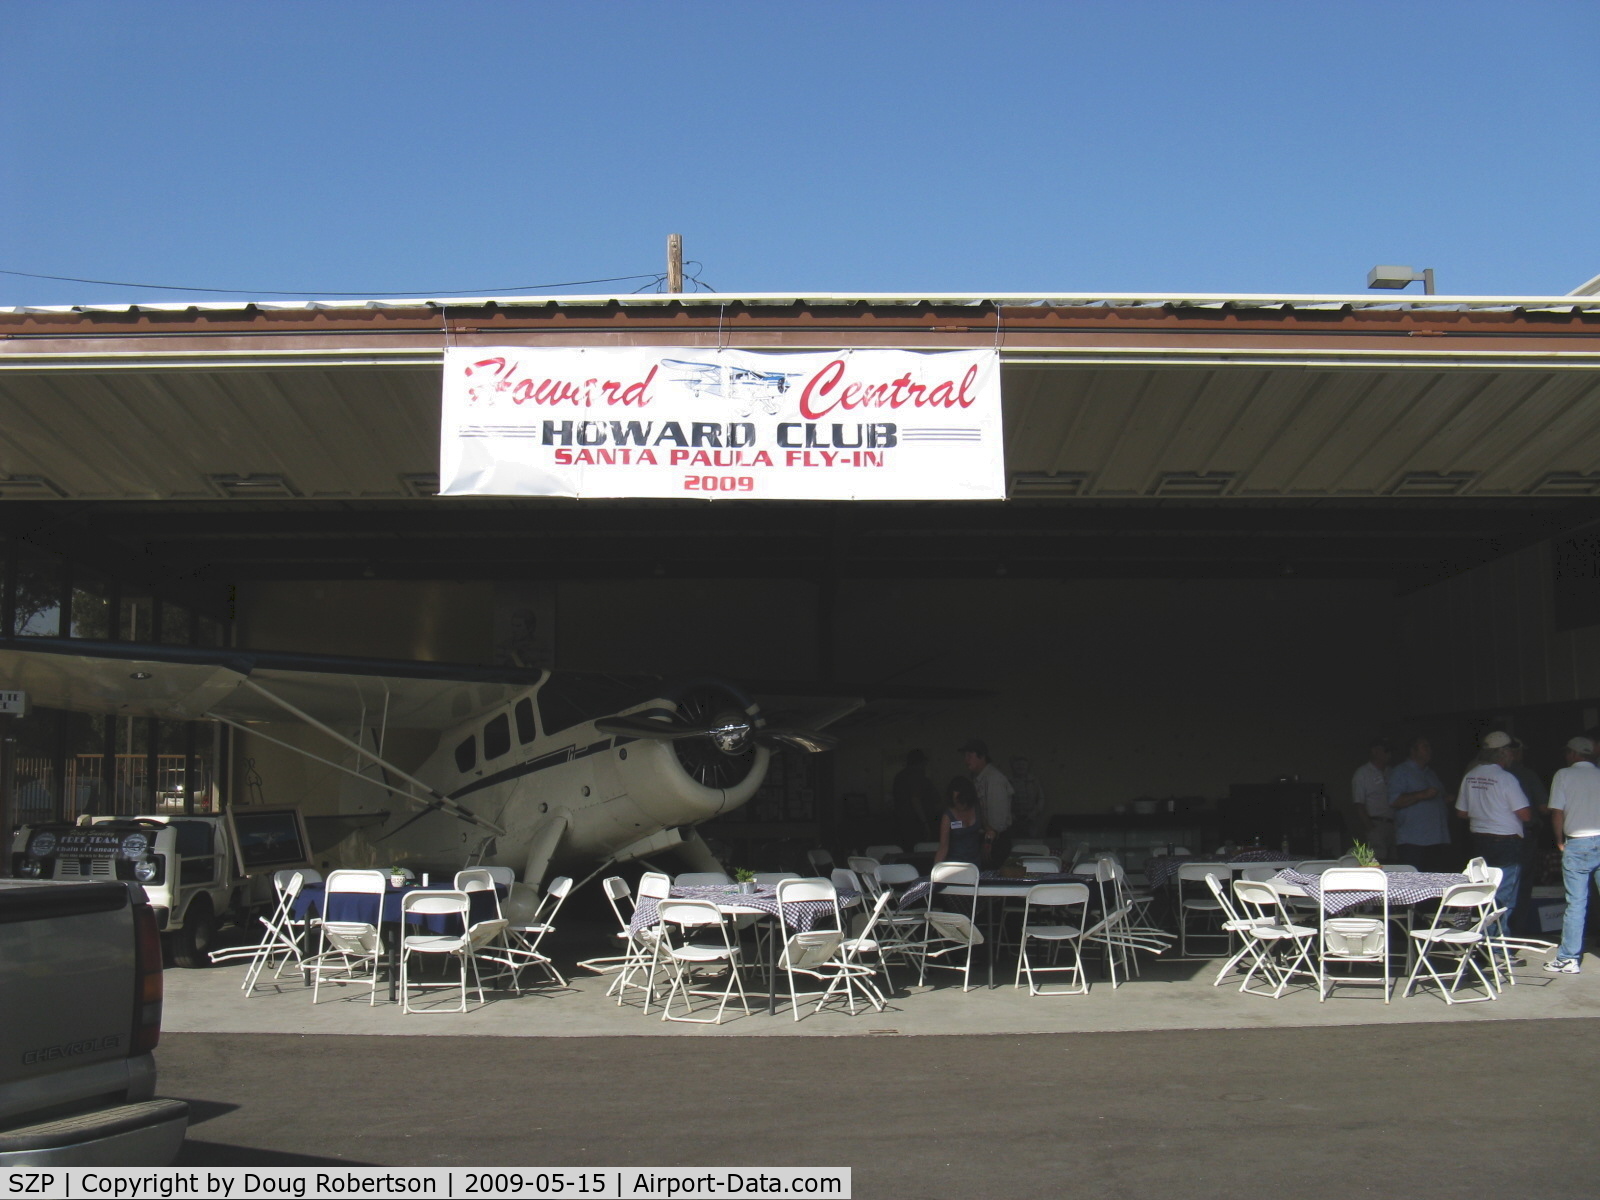 Santa Paula Airport (SZP) - Howard Club Fly-In 2009, Howard Hospitality Center. N4638N, the Dickenson's DGA-15P 'White Bear' Host aircraft